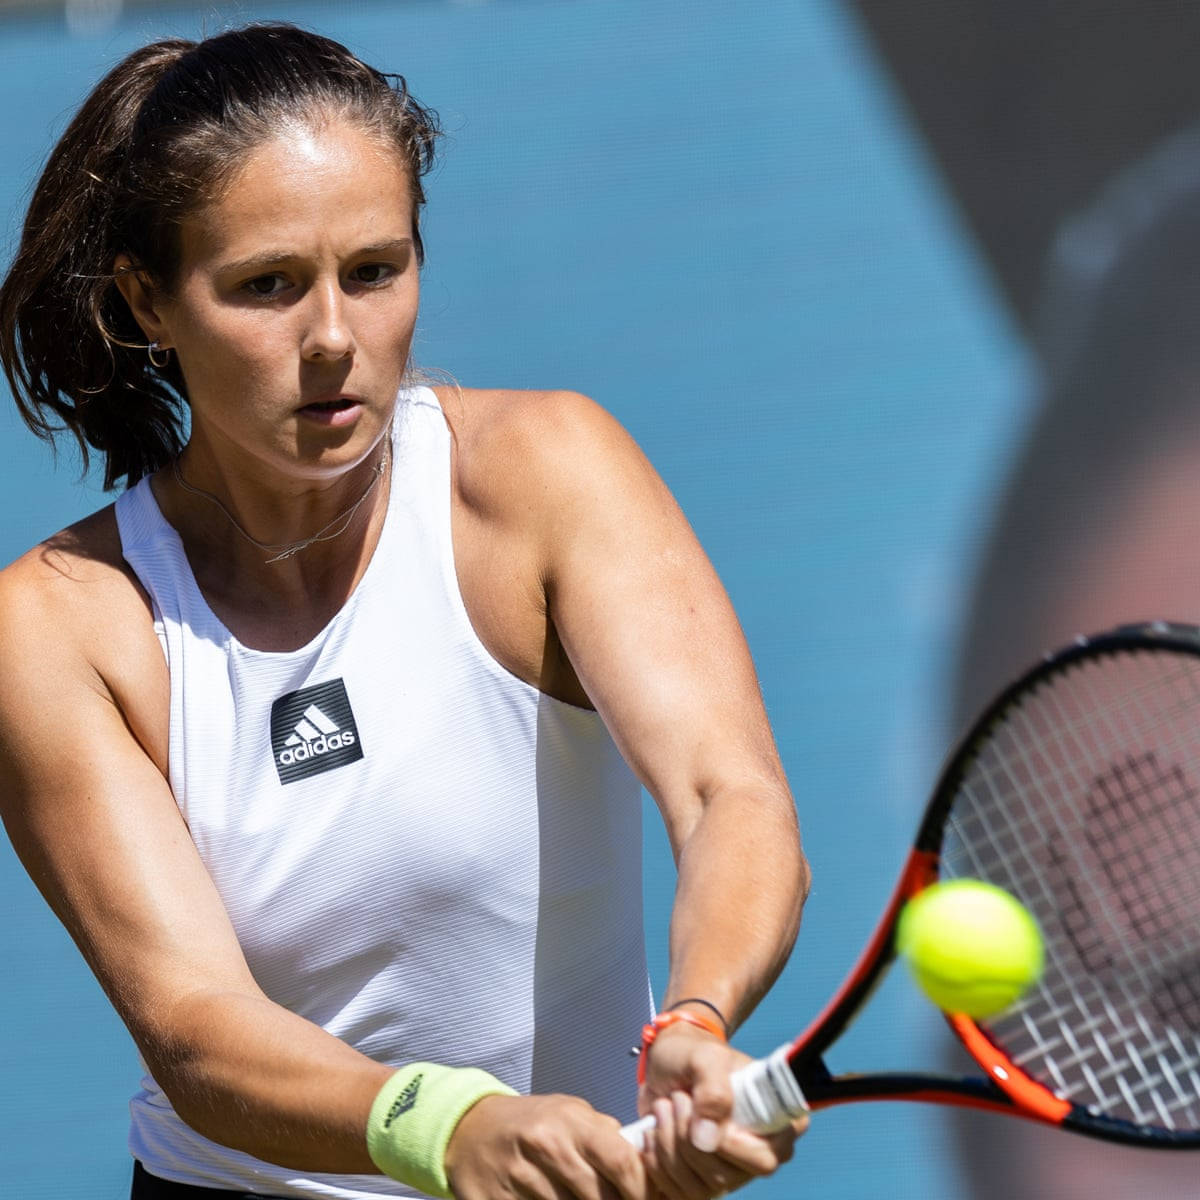 Daria Kasatkina in action on the tennis court Wallpaper